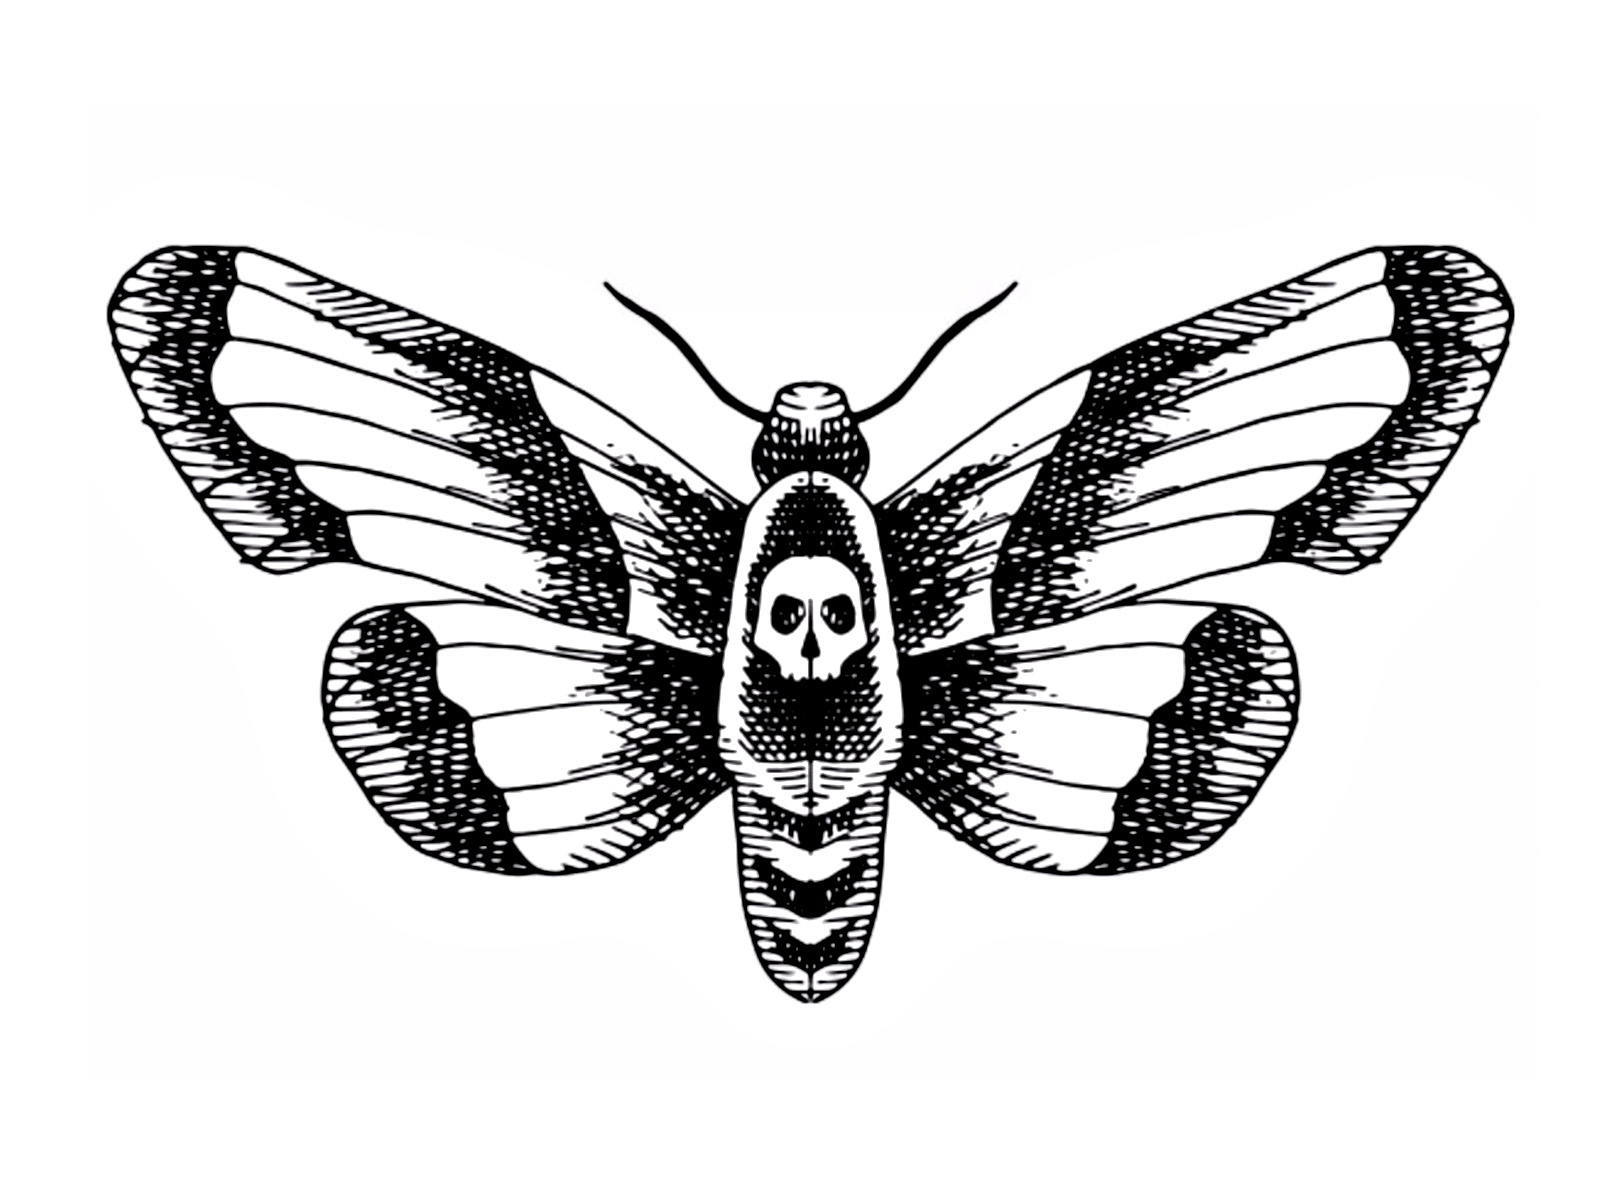 Moth. Ink Sketch. by Alex Hliv on Dribbble